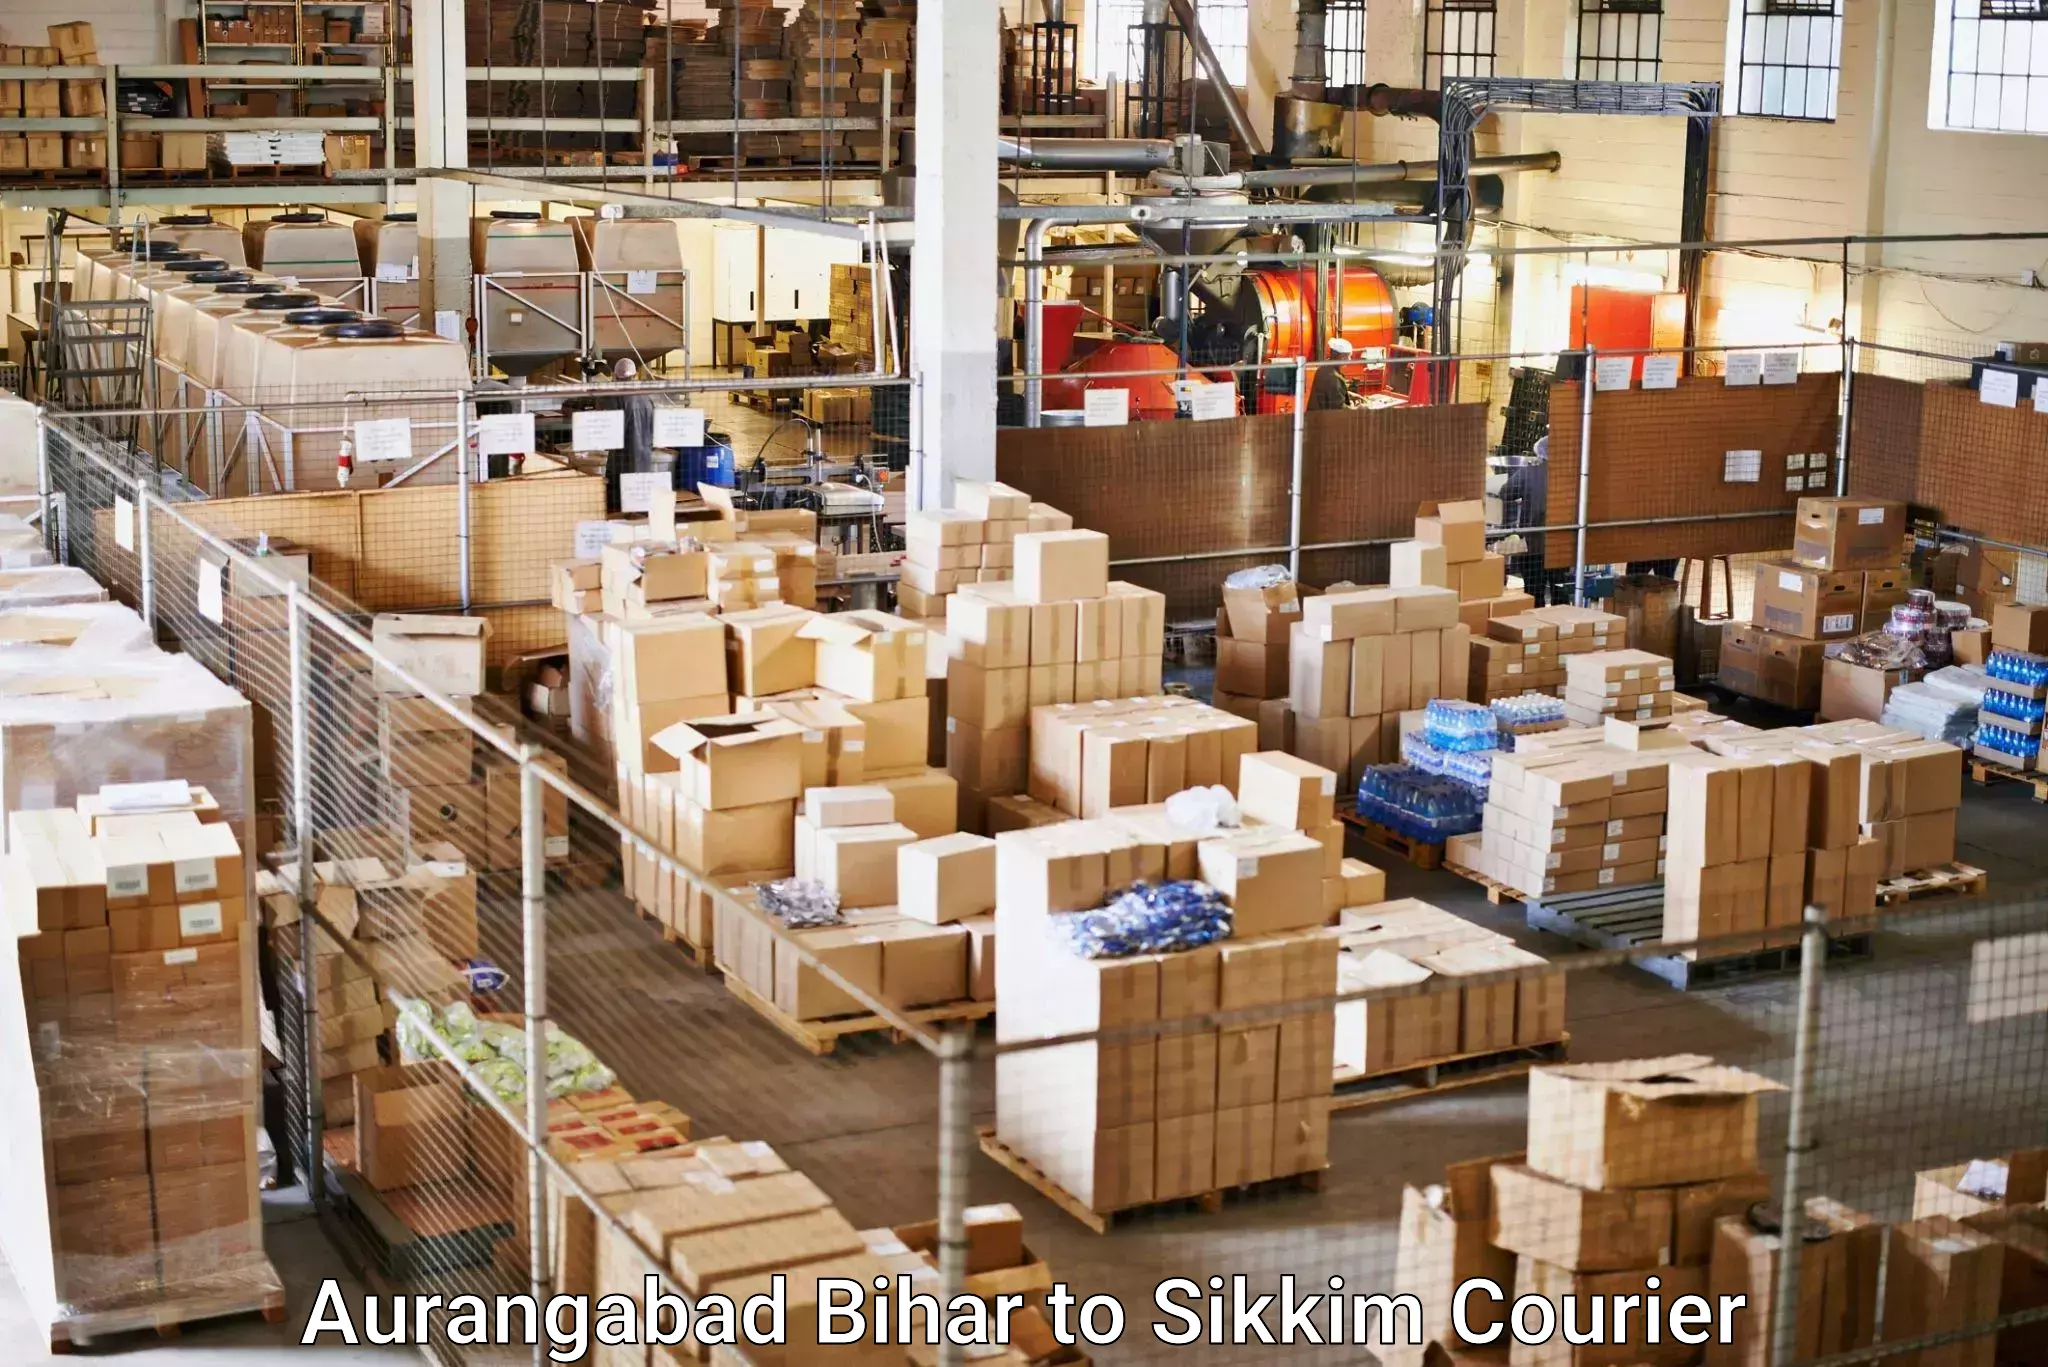 Cargo delivery service Aurangabad Bihar to Rangpo